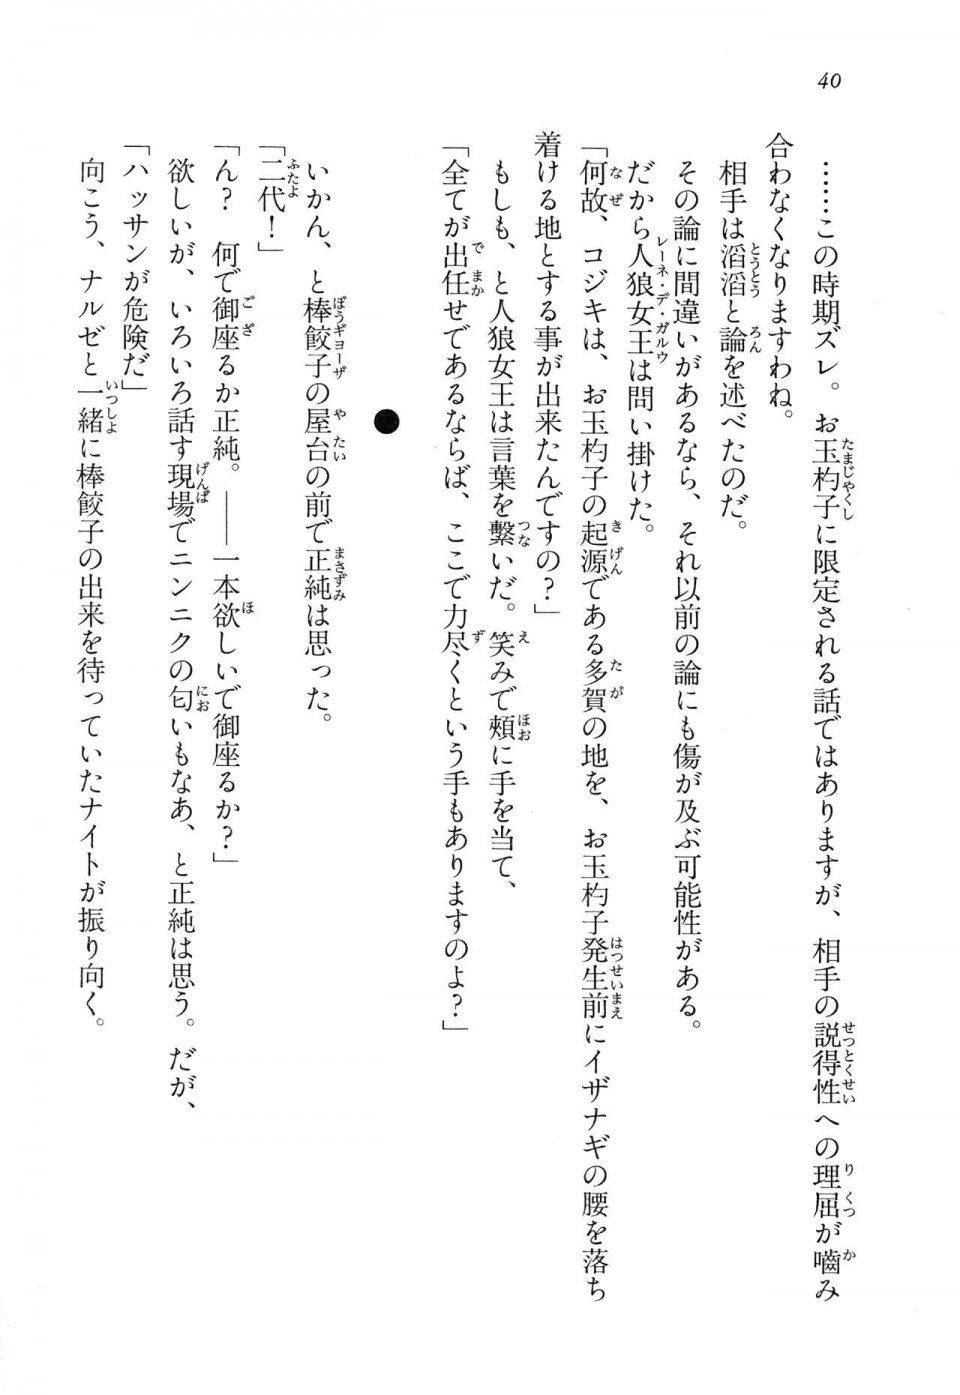 Kyoukai Senjou no Horizon LN Vol 15(6C) Part 1 - Photo #40